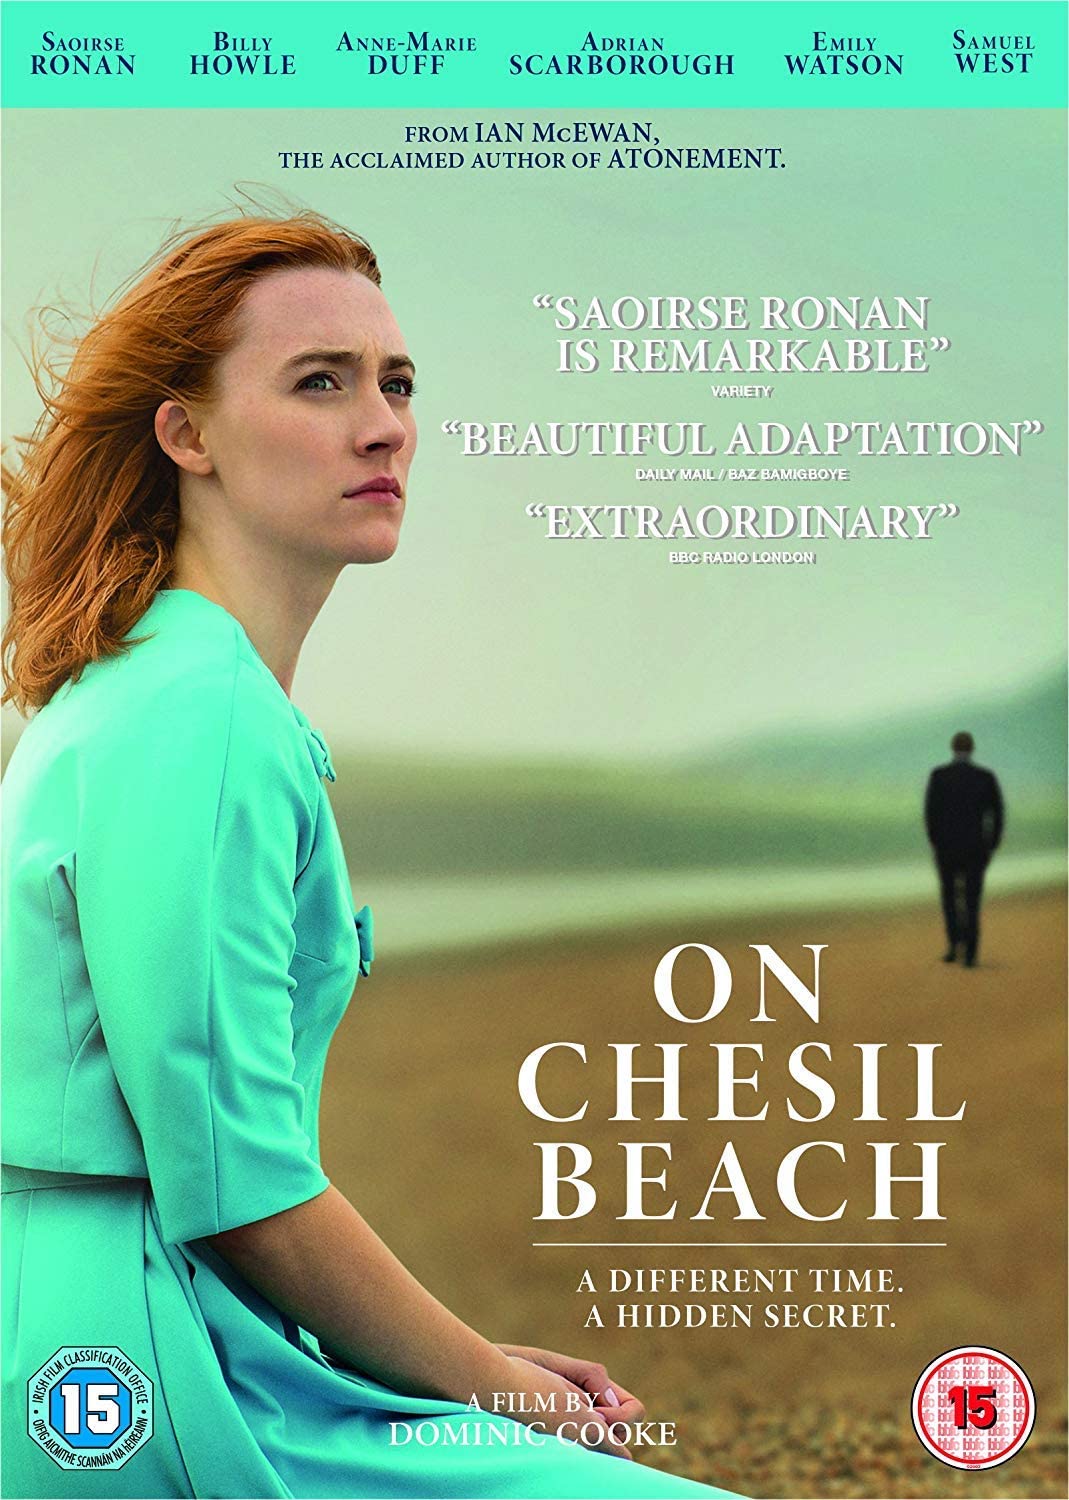 On Chesil Beach [2018] - Romance/Drama [DVD]